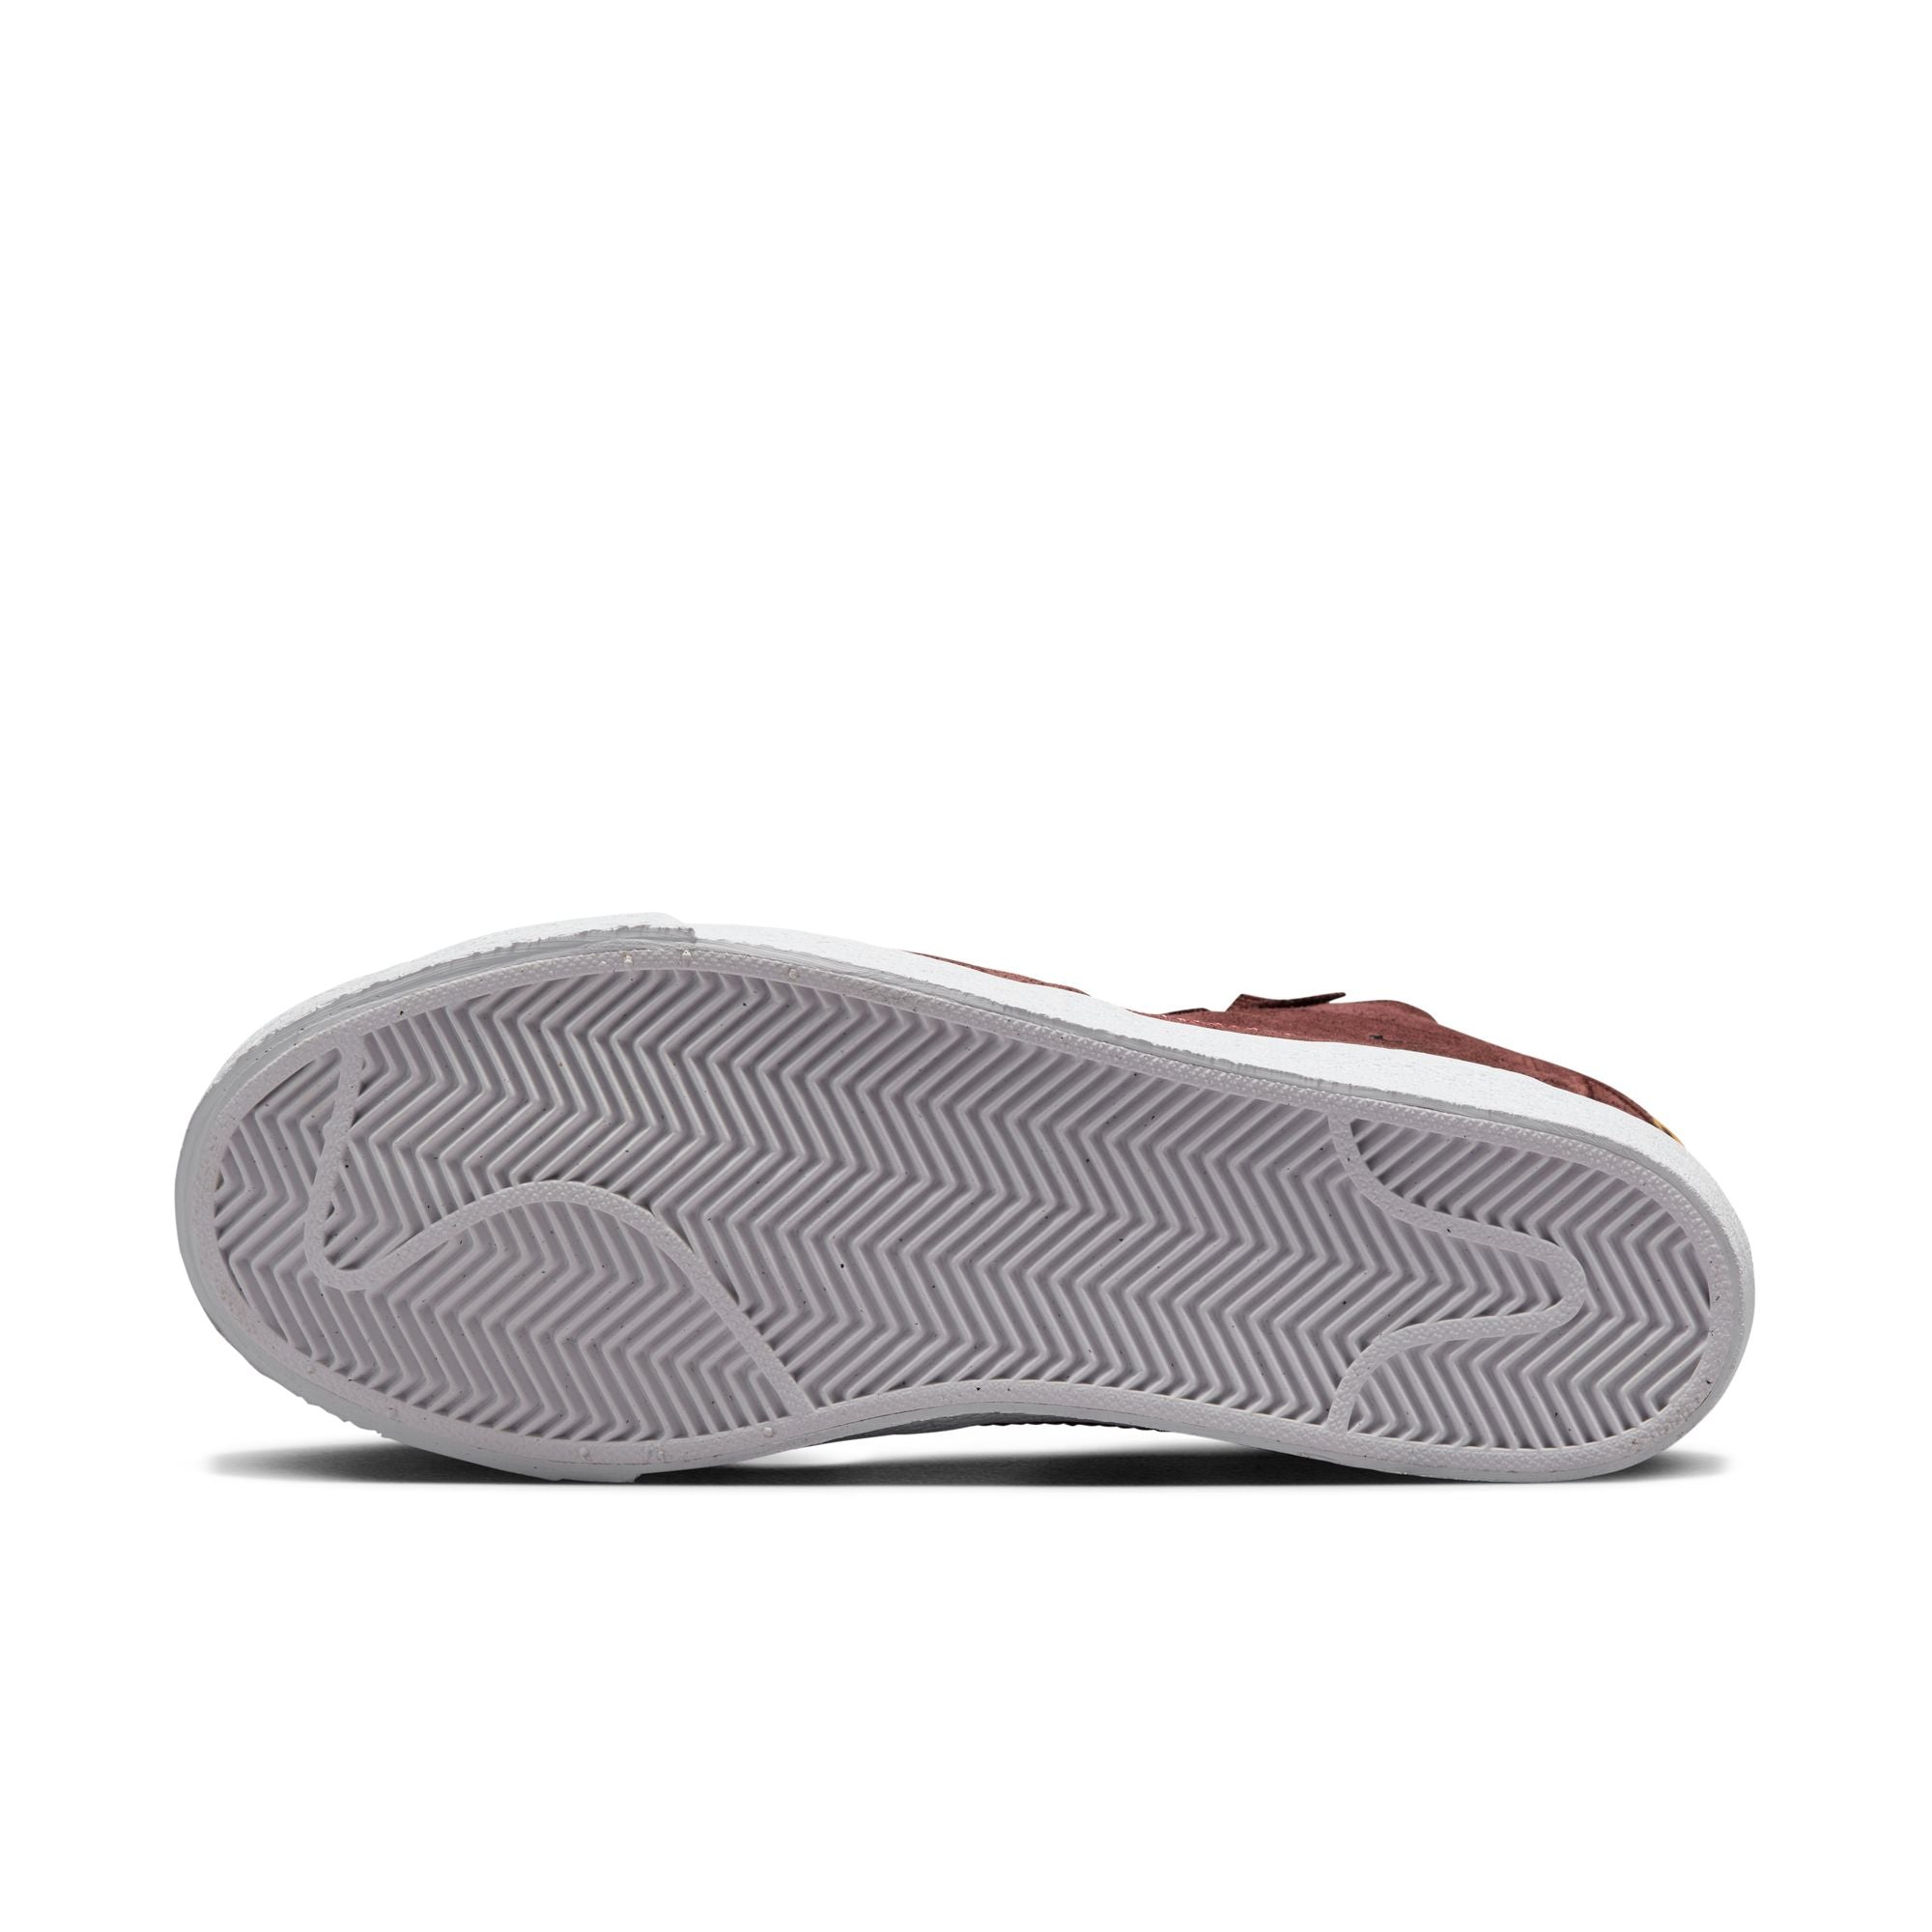 Nike SB Blazer Mid Premium Shoes - Night Maroon/Rosewood-White